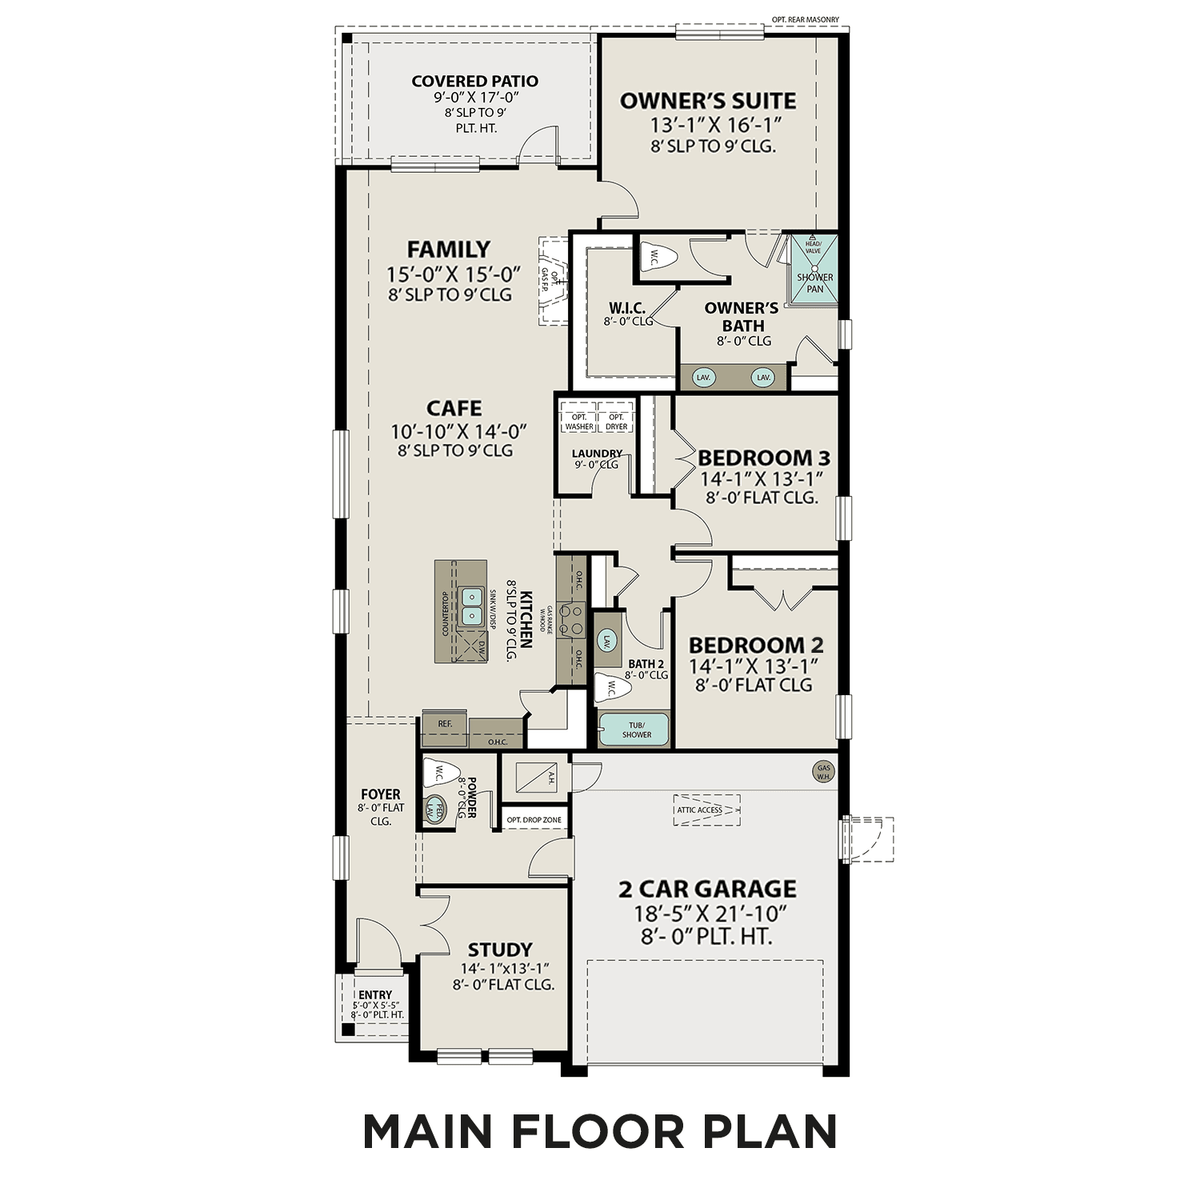 1 - The Riviera A floor plan layout for 2533 Malibu Glen Drive in Davidson Homes' Sunterra community.